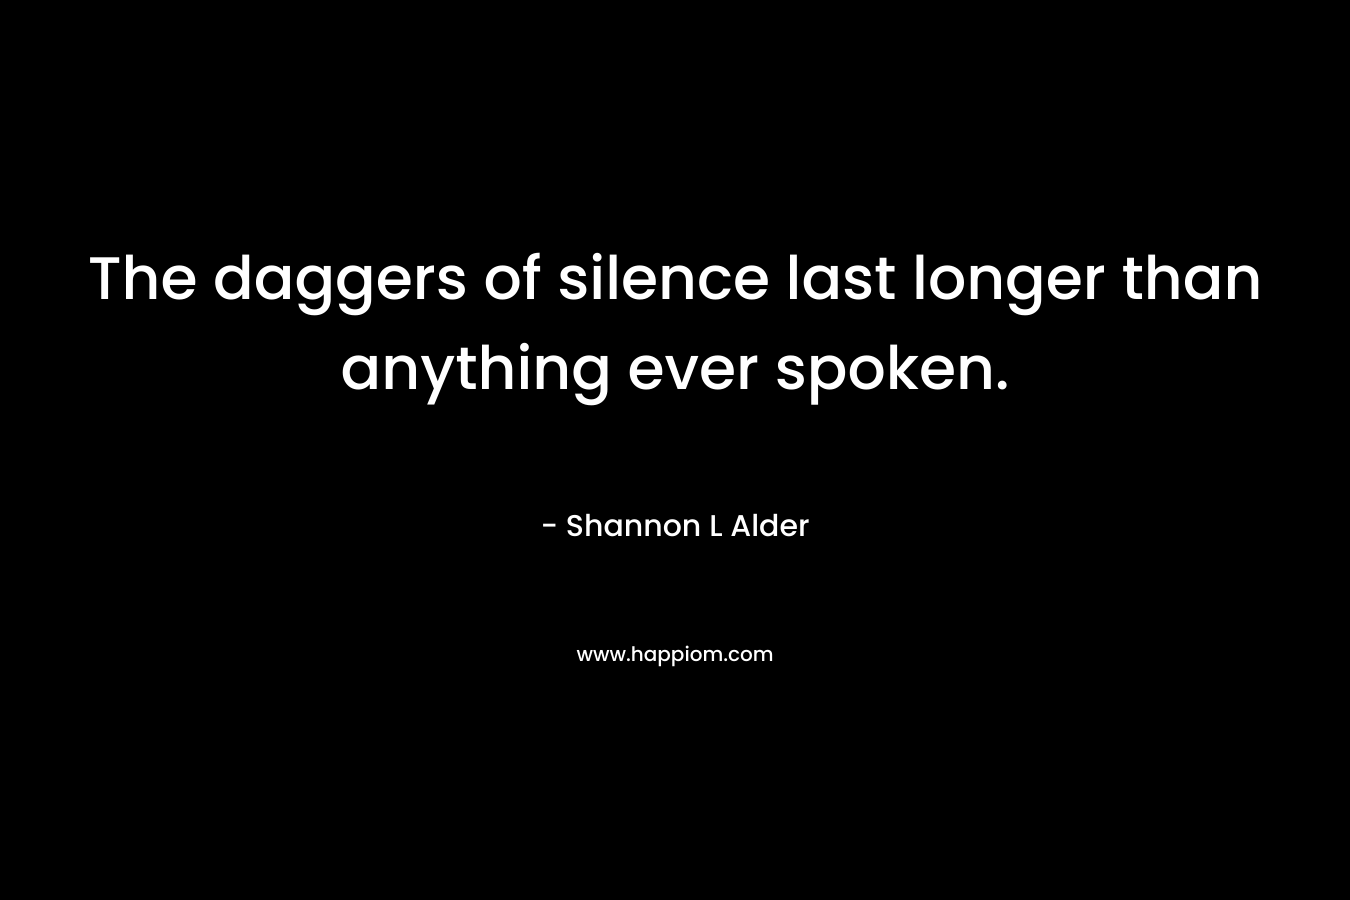 The daggers of silence last longer than anything ever spoken.